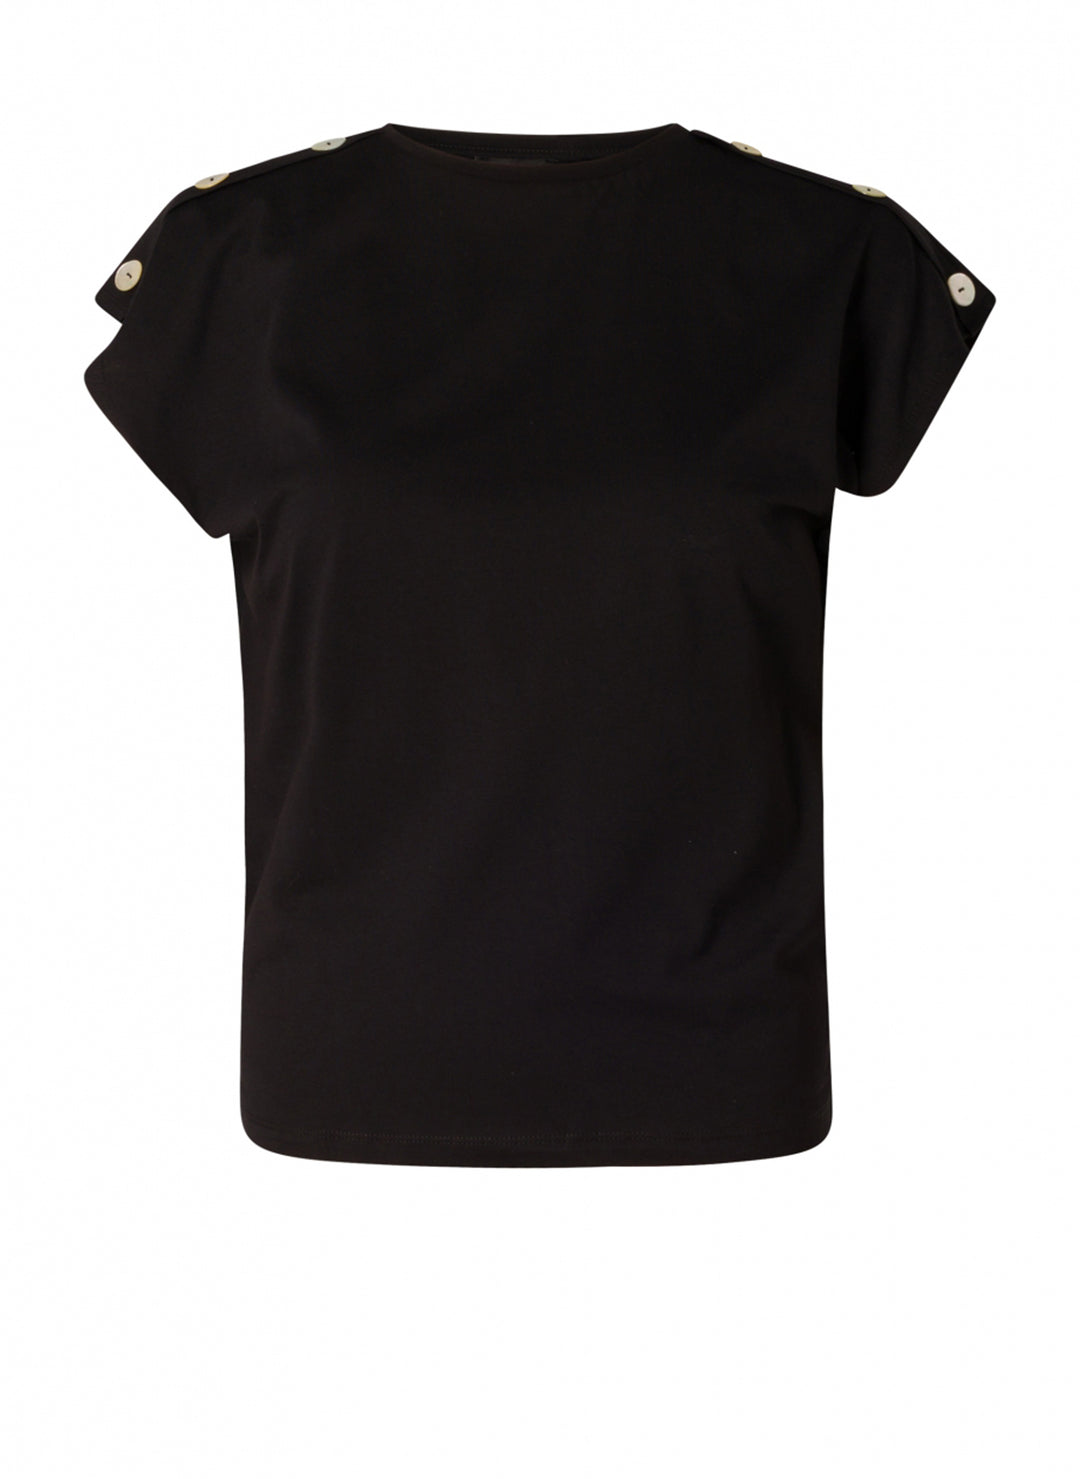 zwart t-shirt van katoen-yesta-